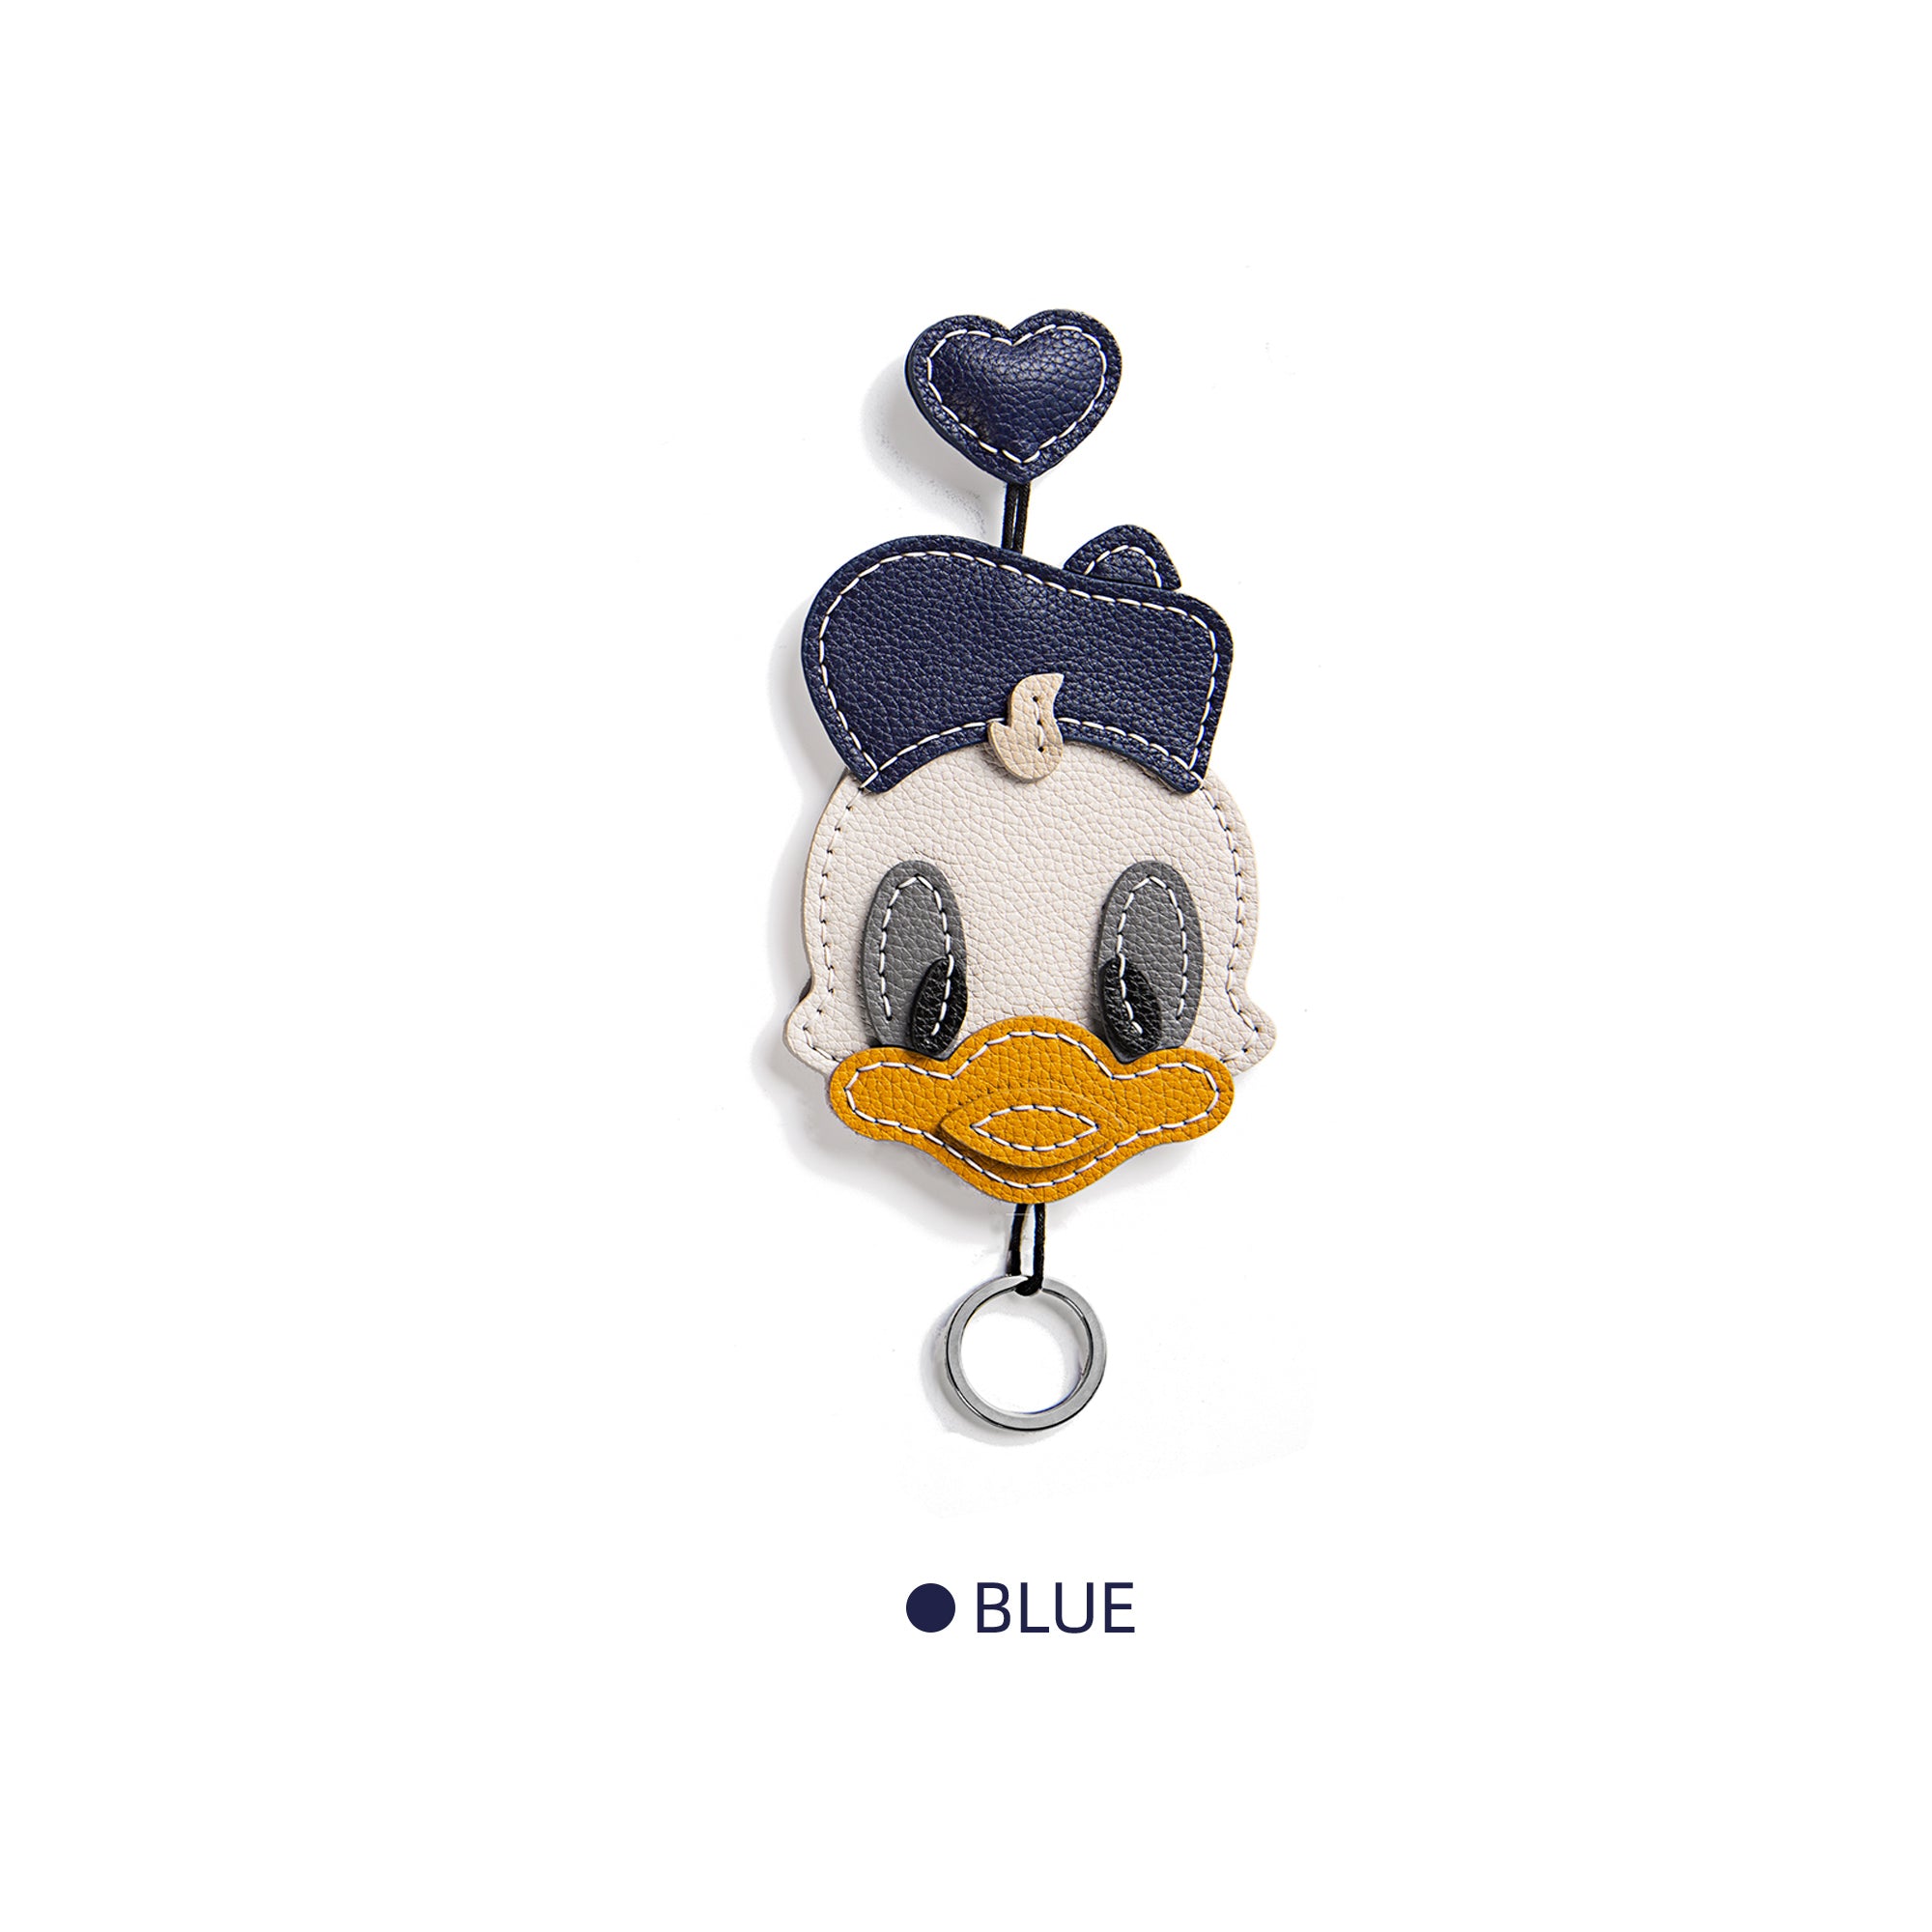 DIY Kits - Donald Duck Keychain